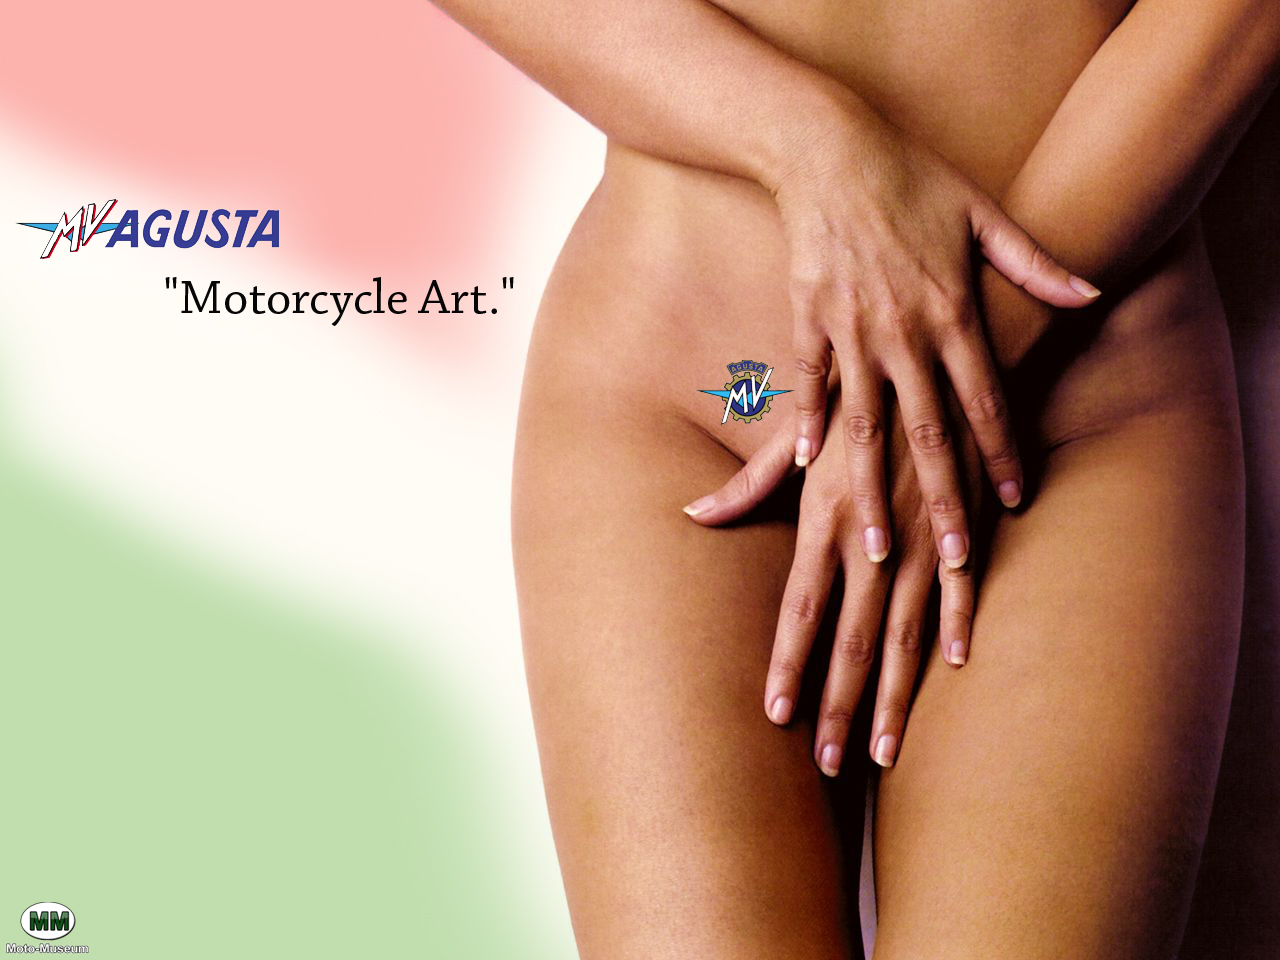 MV Agusta - Slogan "Motorcycle Art." - Sexy Girl